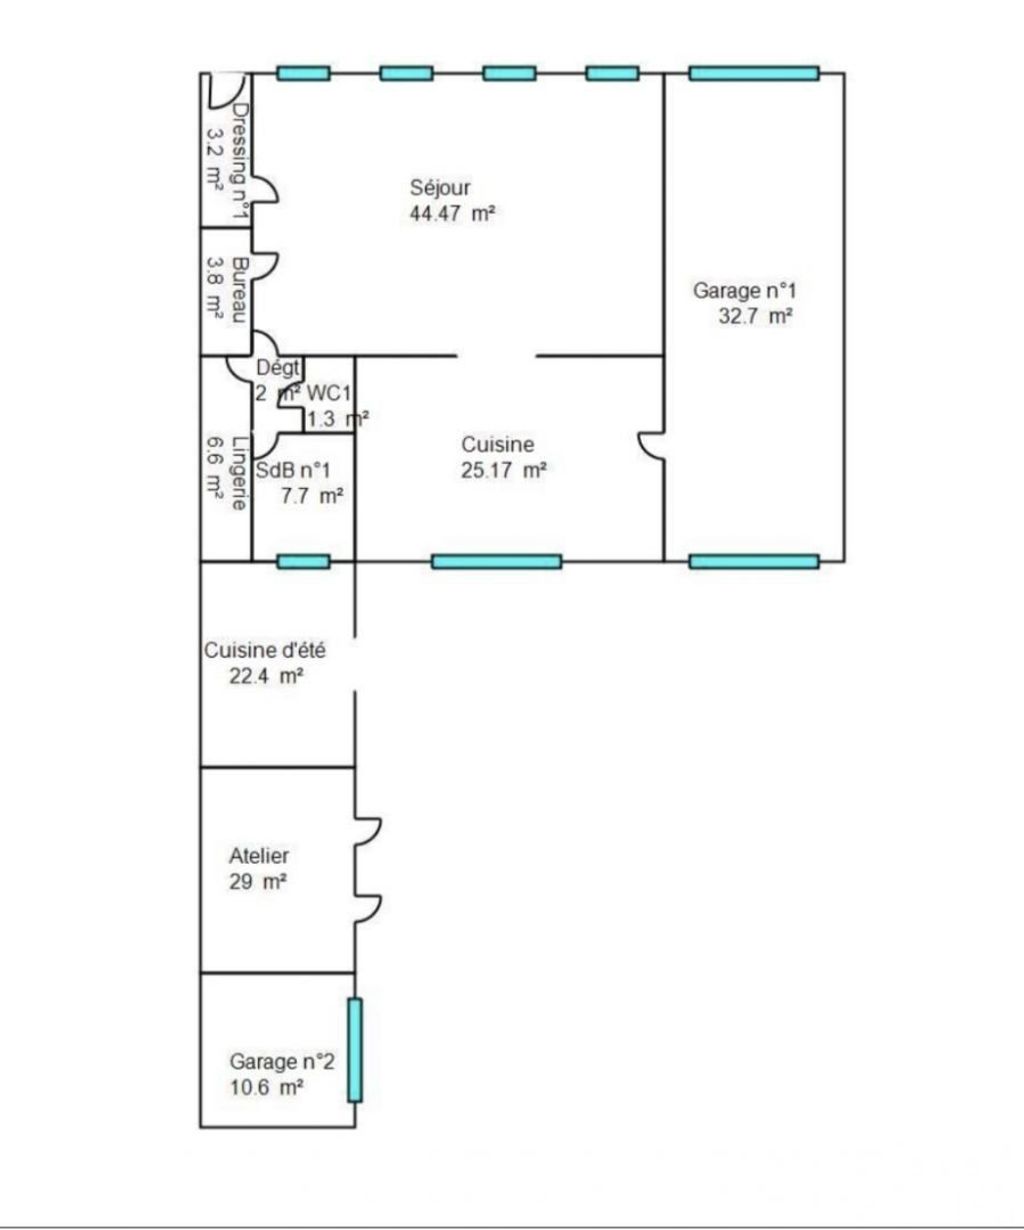 Achat maison à vendre 5 chambres 285 m² - Glisy